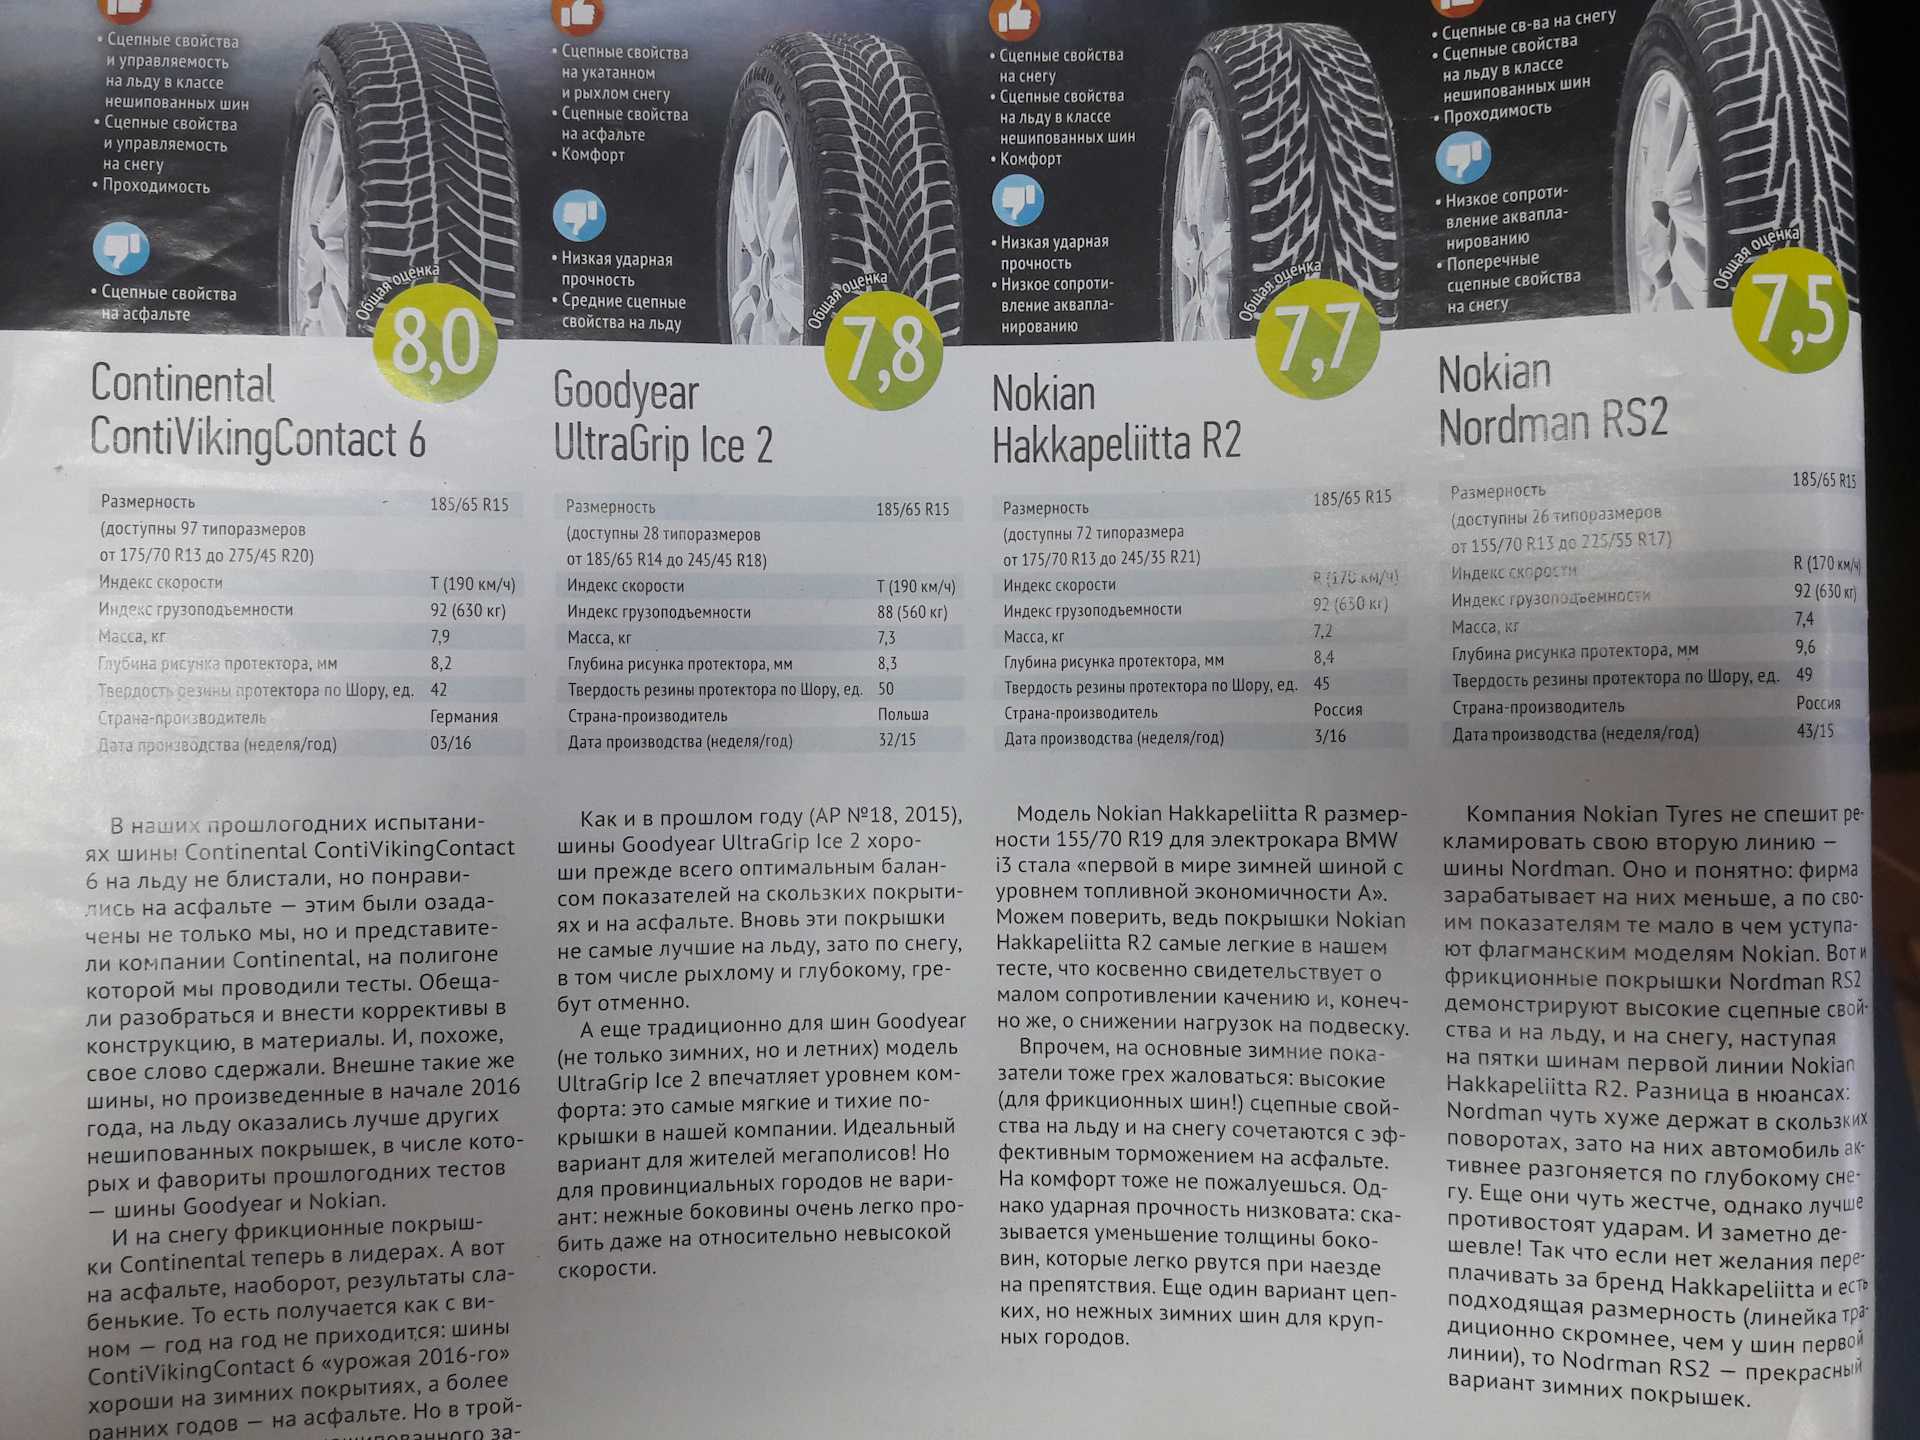 Тест летних шин 195/65 r15 («за рулем», 2021 г.) – статьи интернет-магазина best-tyres.ru